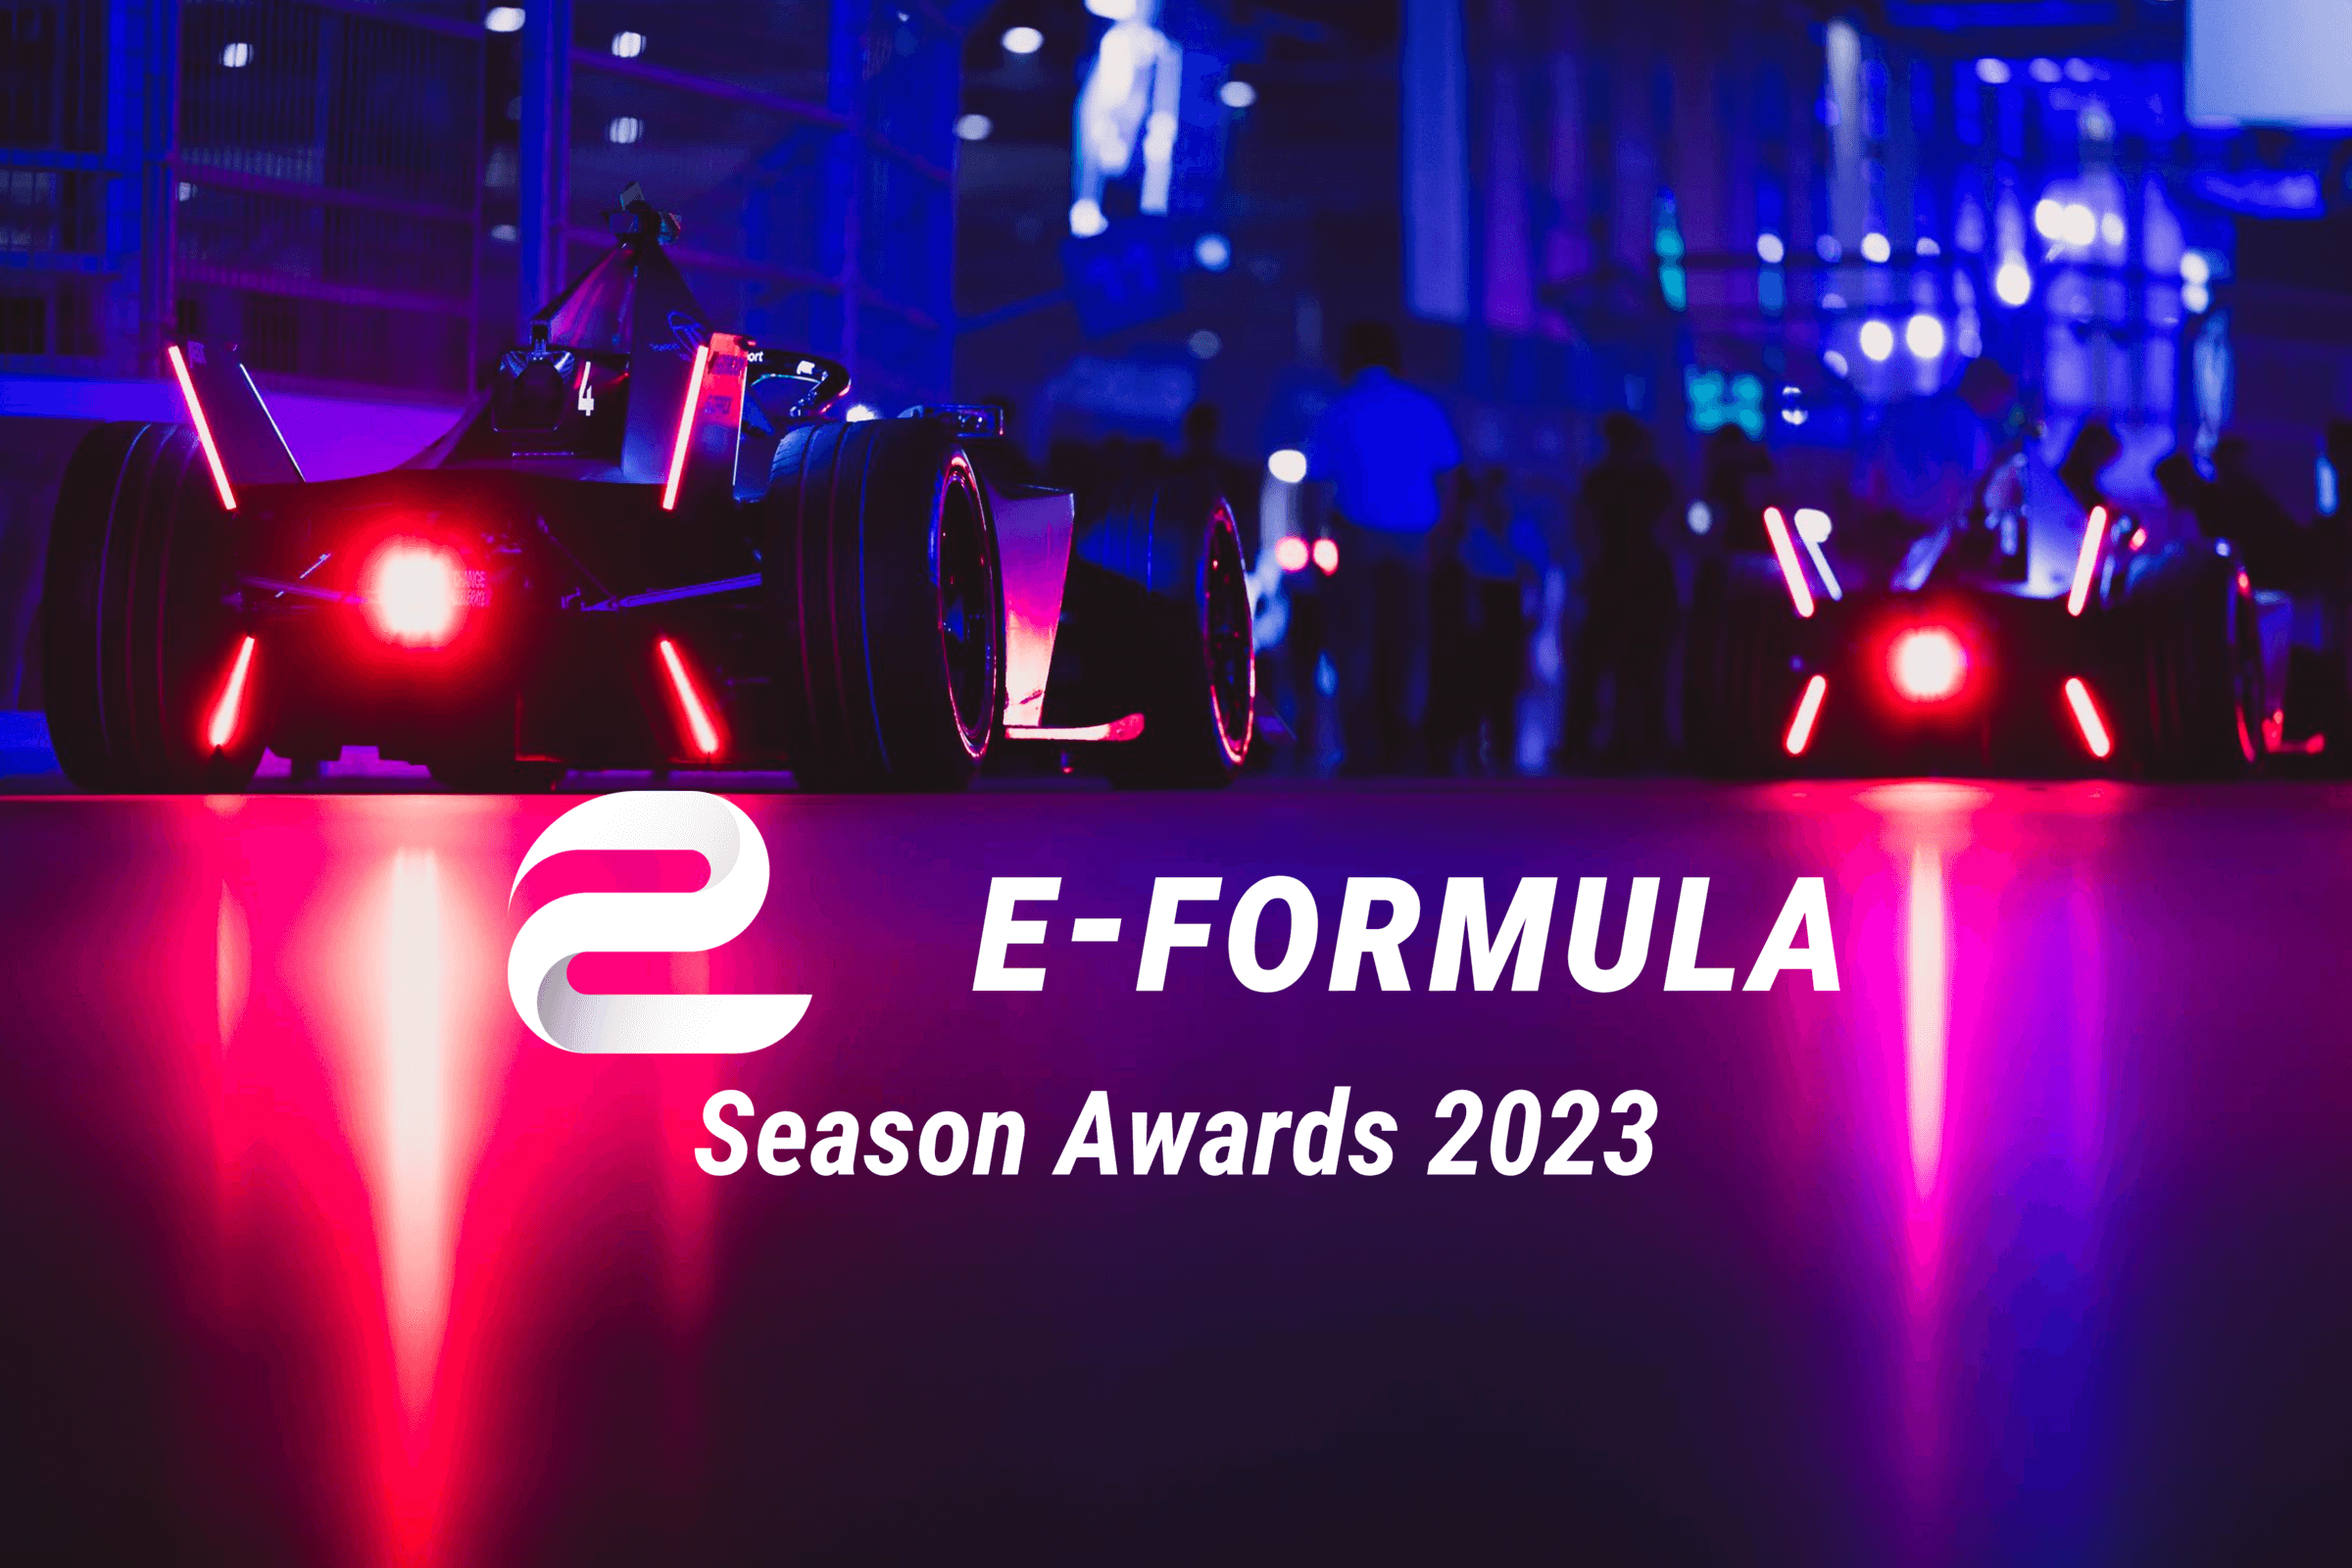 e-Formula.news Season Awards 2023: Jake Dennis & Mitch Evans each awarded 2 gold medals